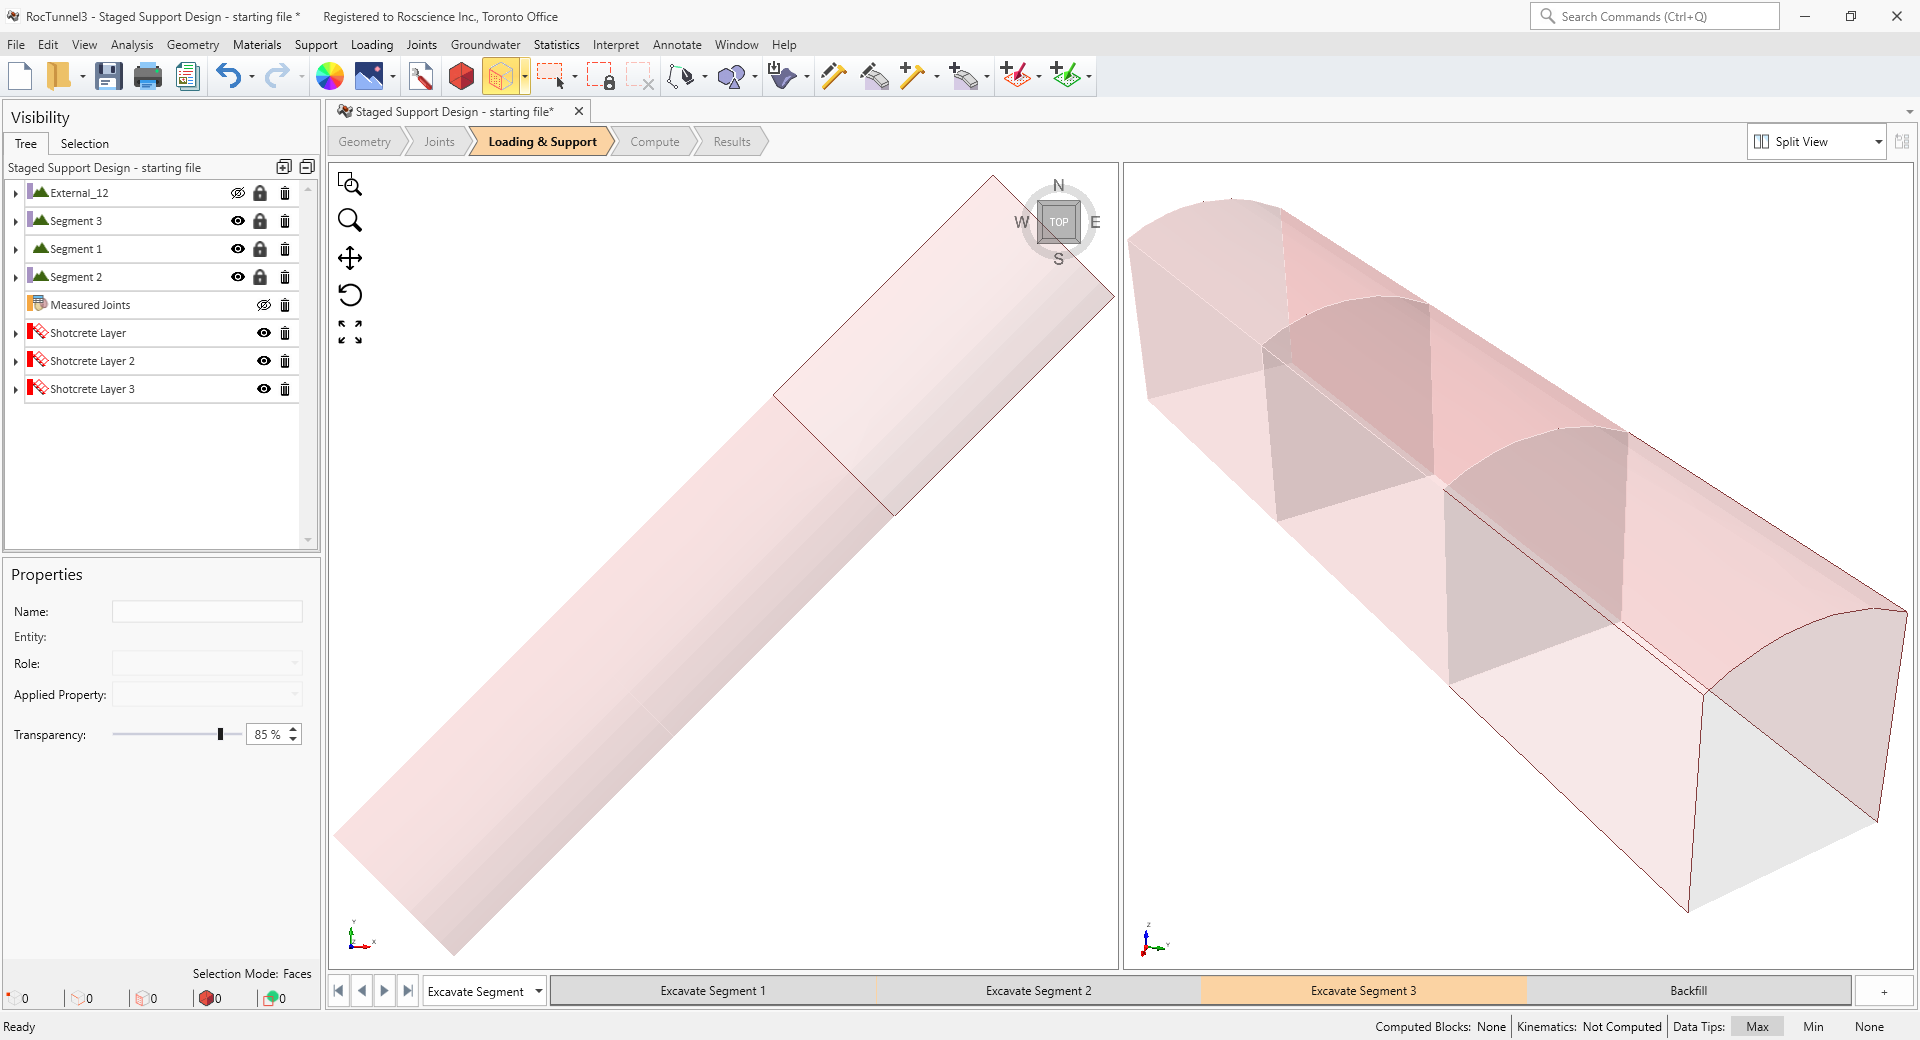 3D CAD View of shotcrete layer added to Segment 3 in Excavate Segment 3 stage